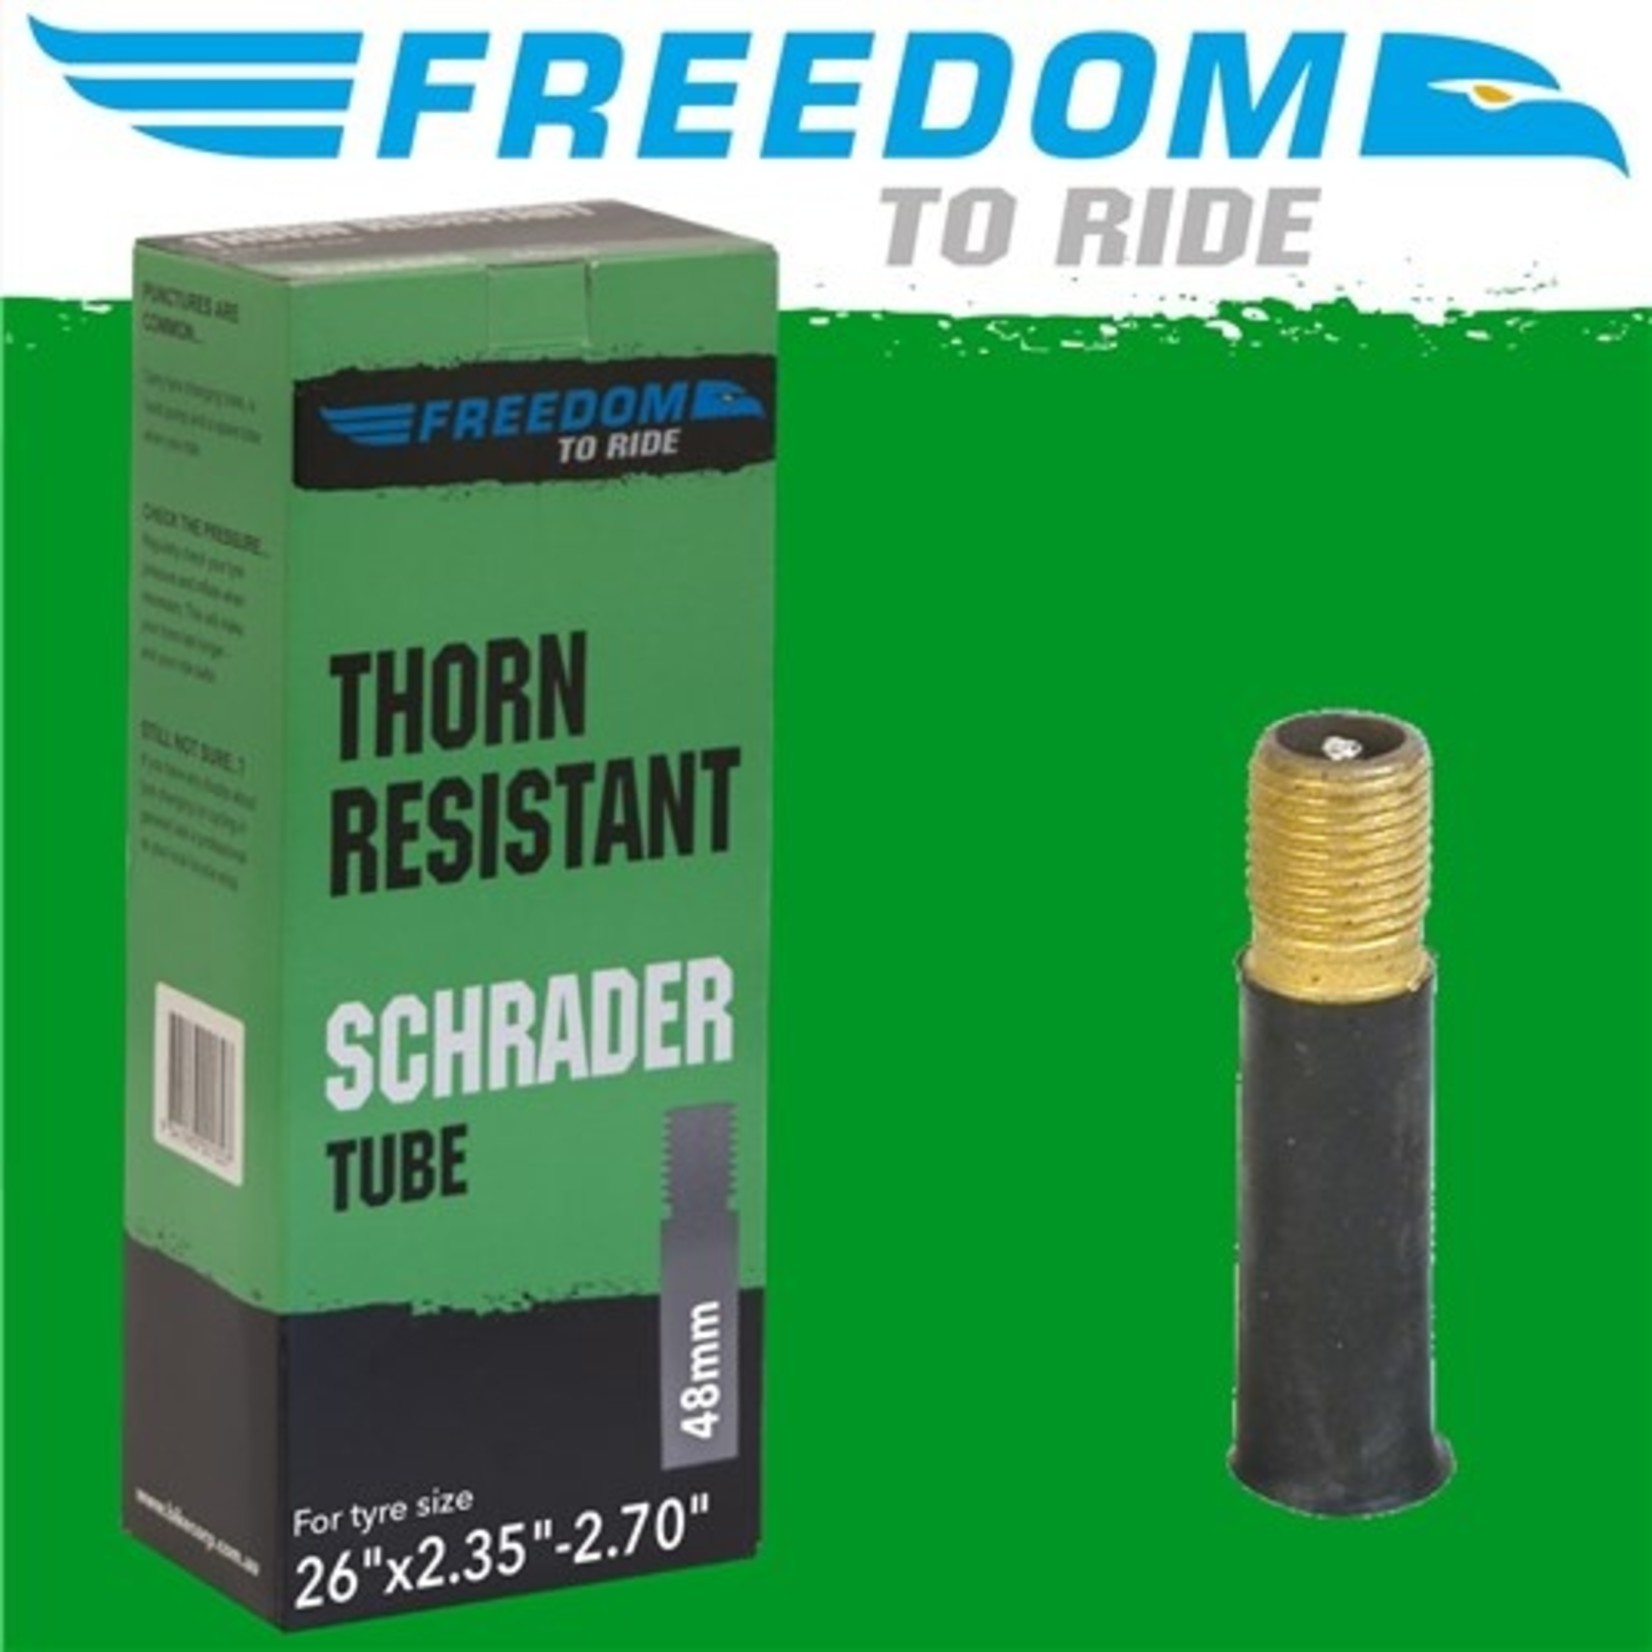 Freedom Freedom Bike Tube - 26" X 2.35-2.70" - Thorn Resistant Schrader Valve 48mm